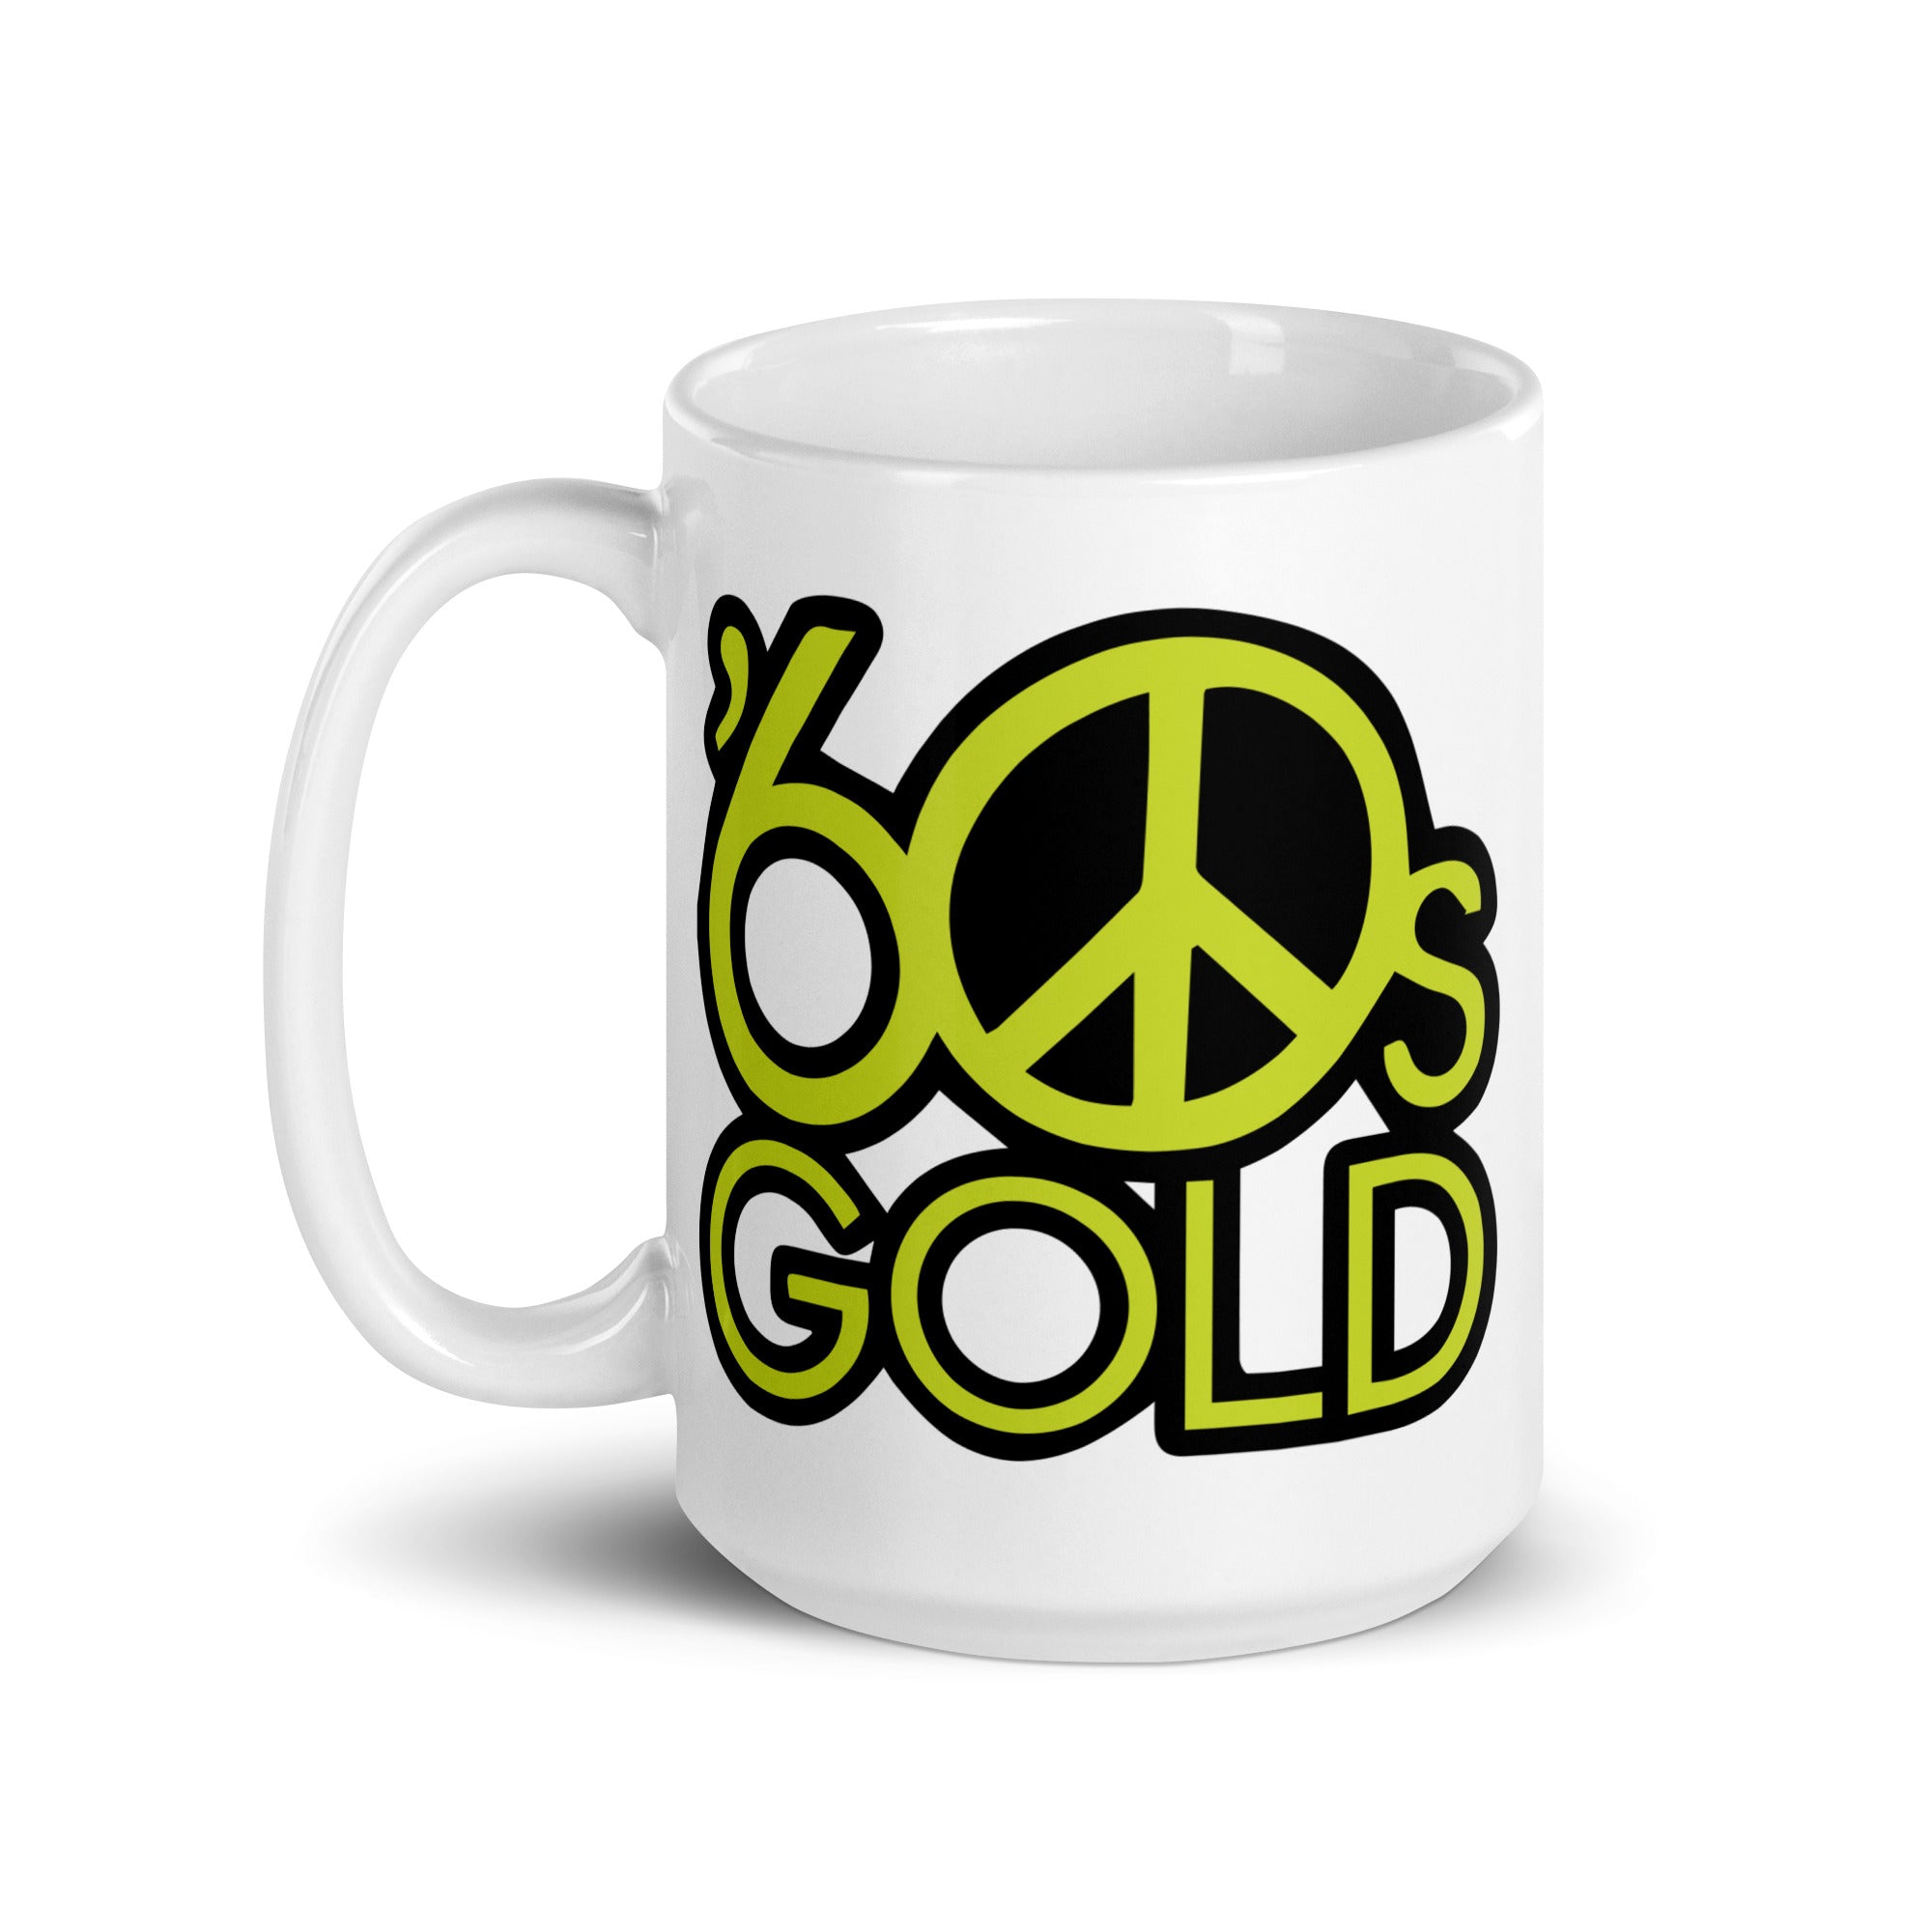 60s Gold: Mug